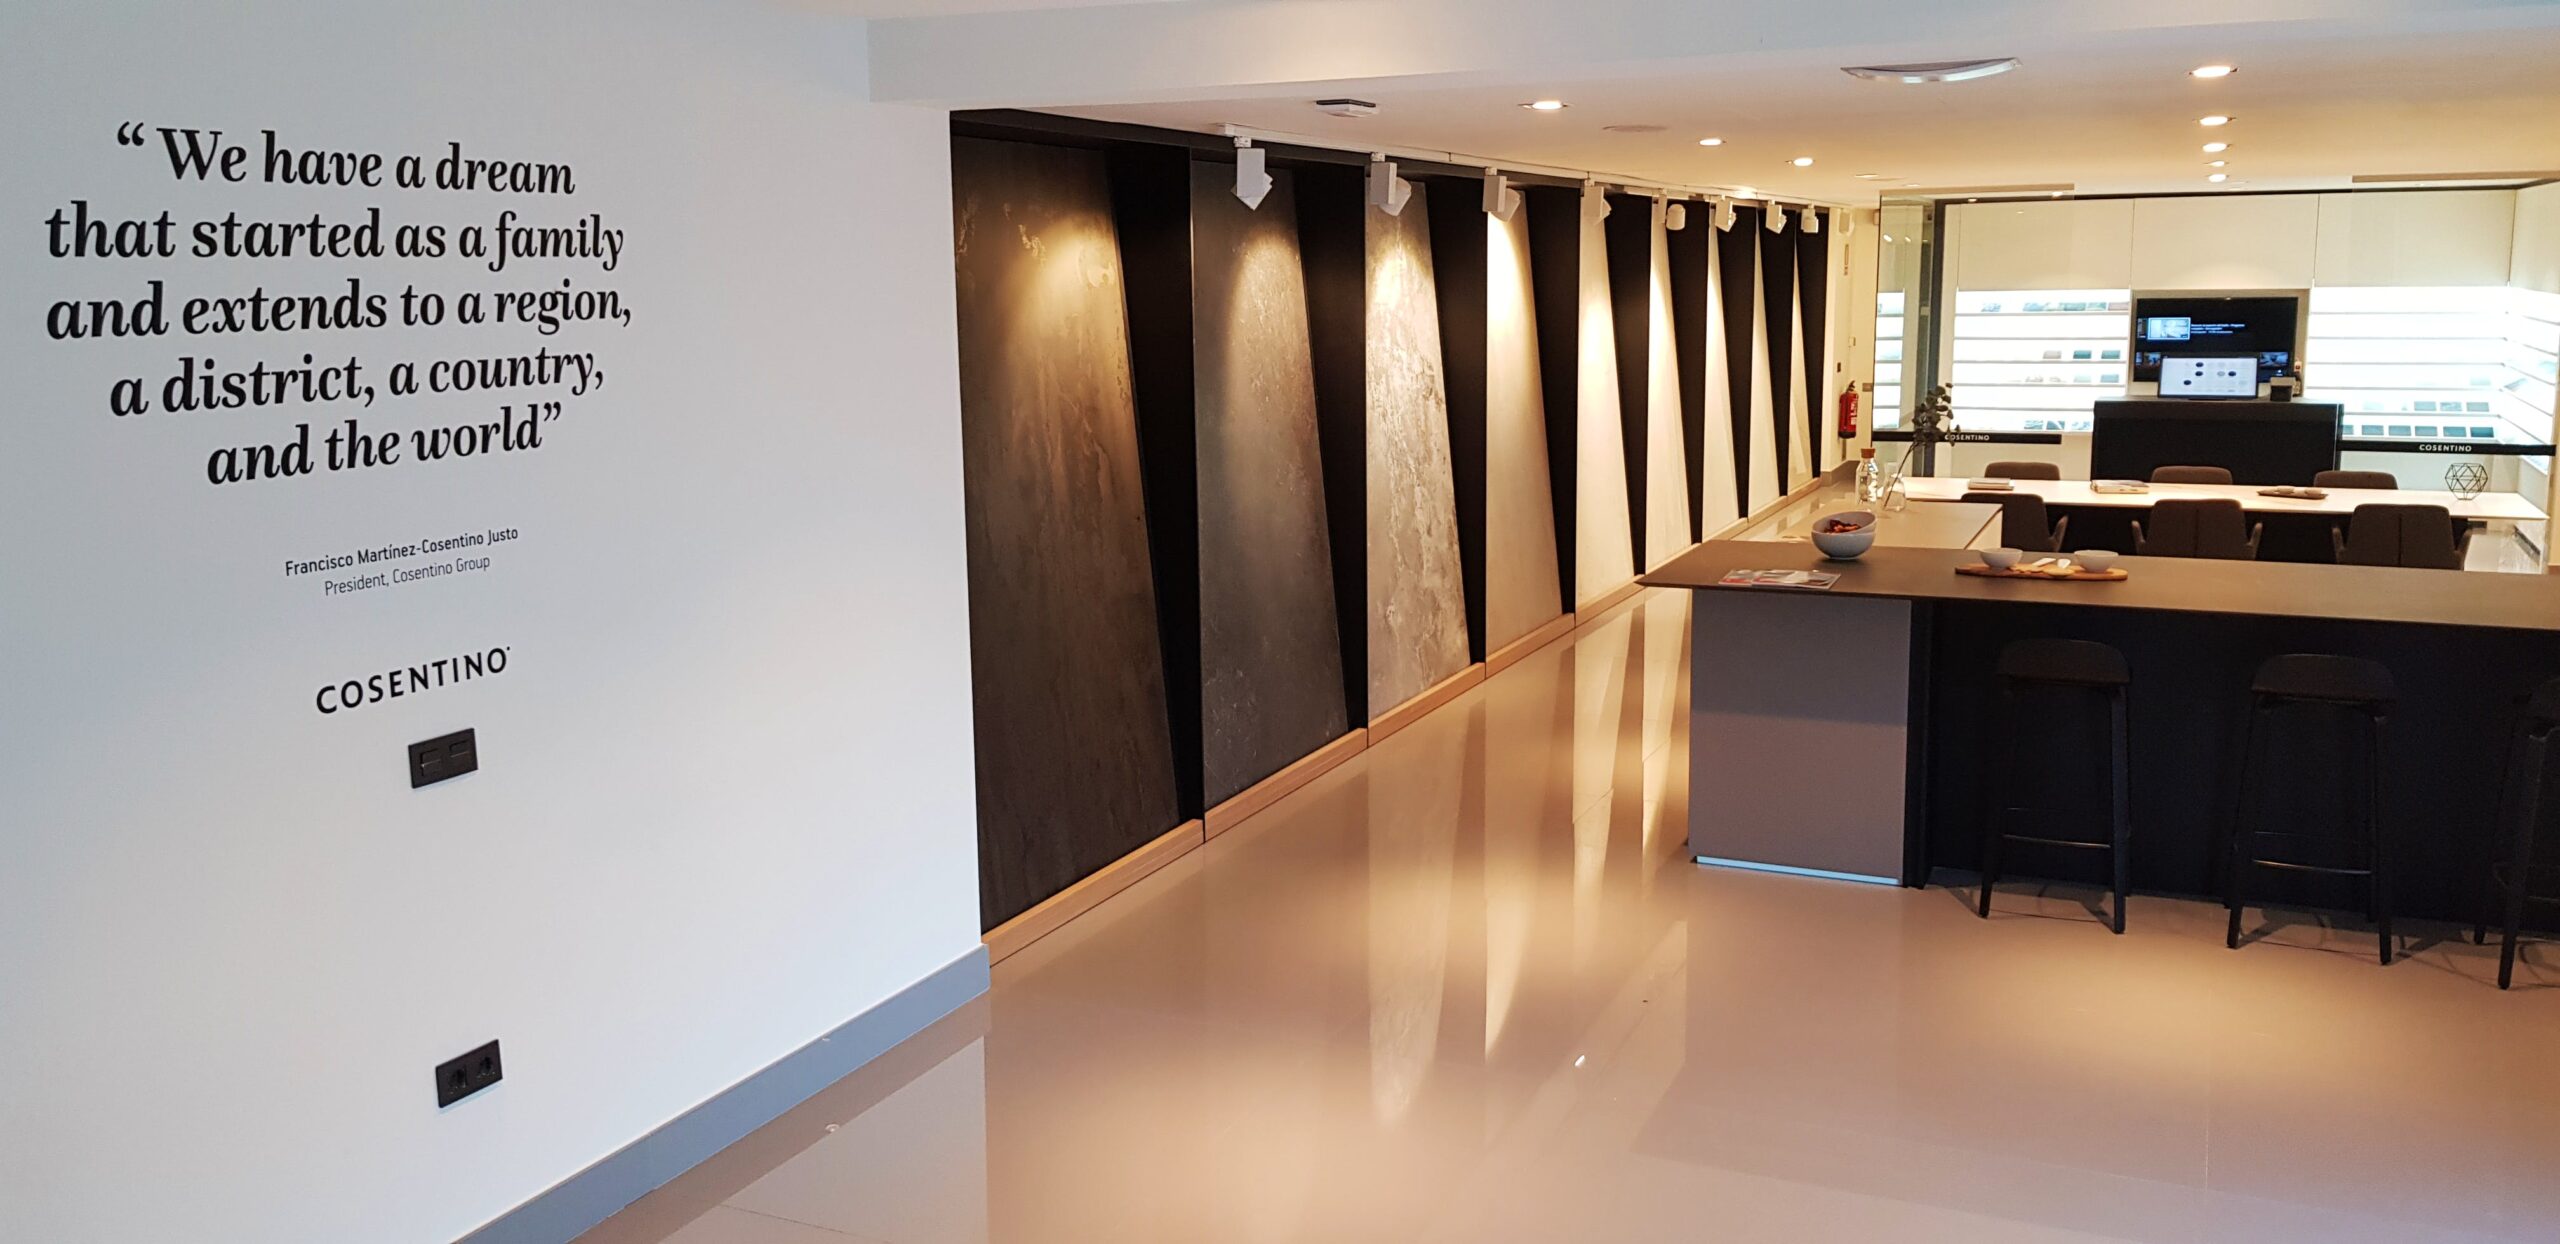 Image of Gran formato de tablo y ambiente cocina en Cosentino Barcelona Center 2 scaled in Cosentino Officially Opens New Vancouver Centre Showroom - Cosentino